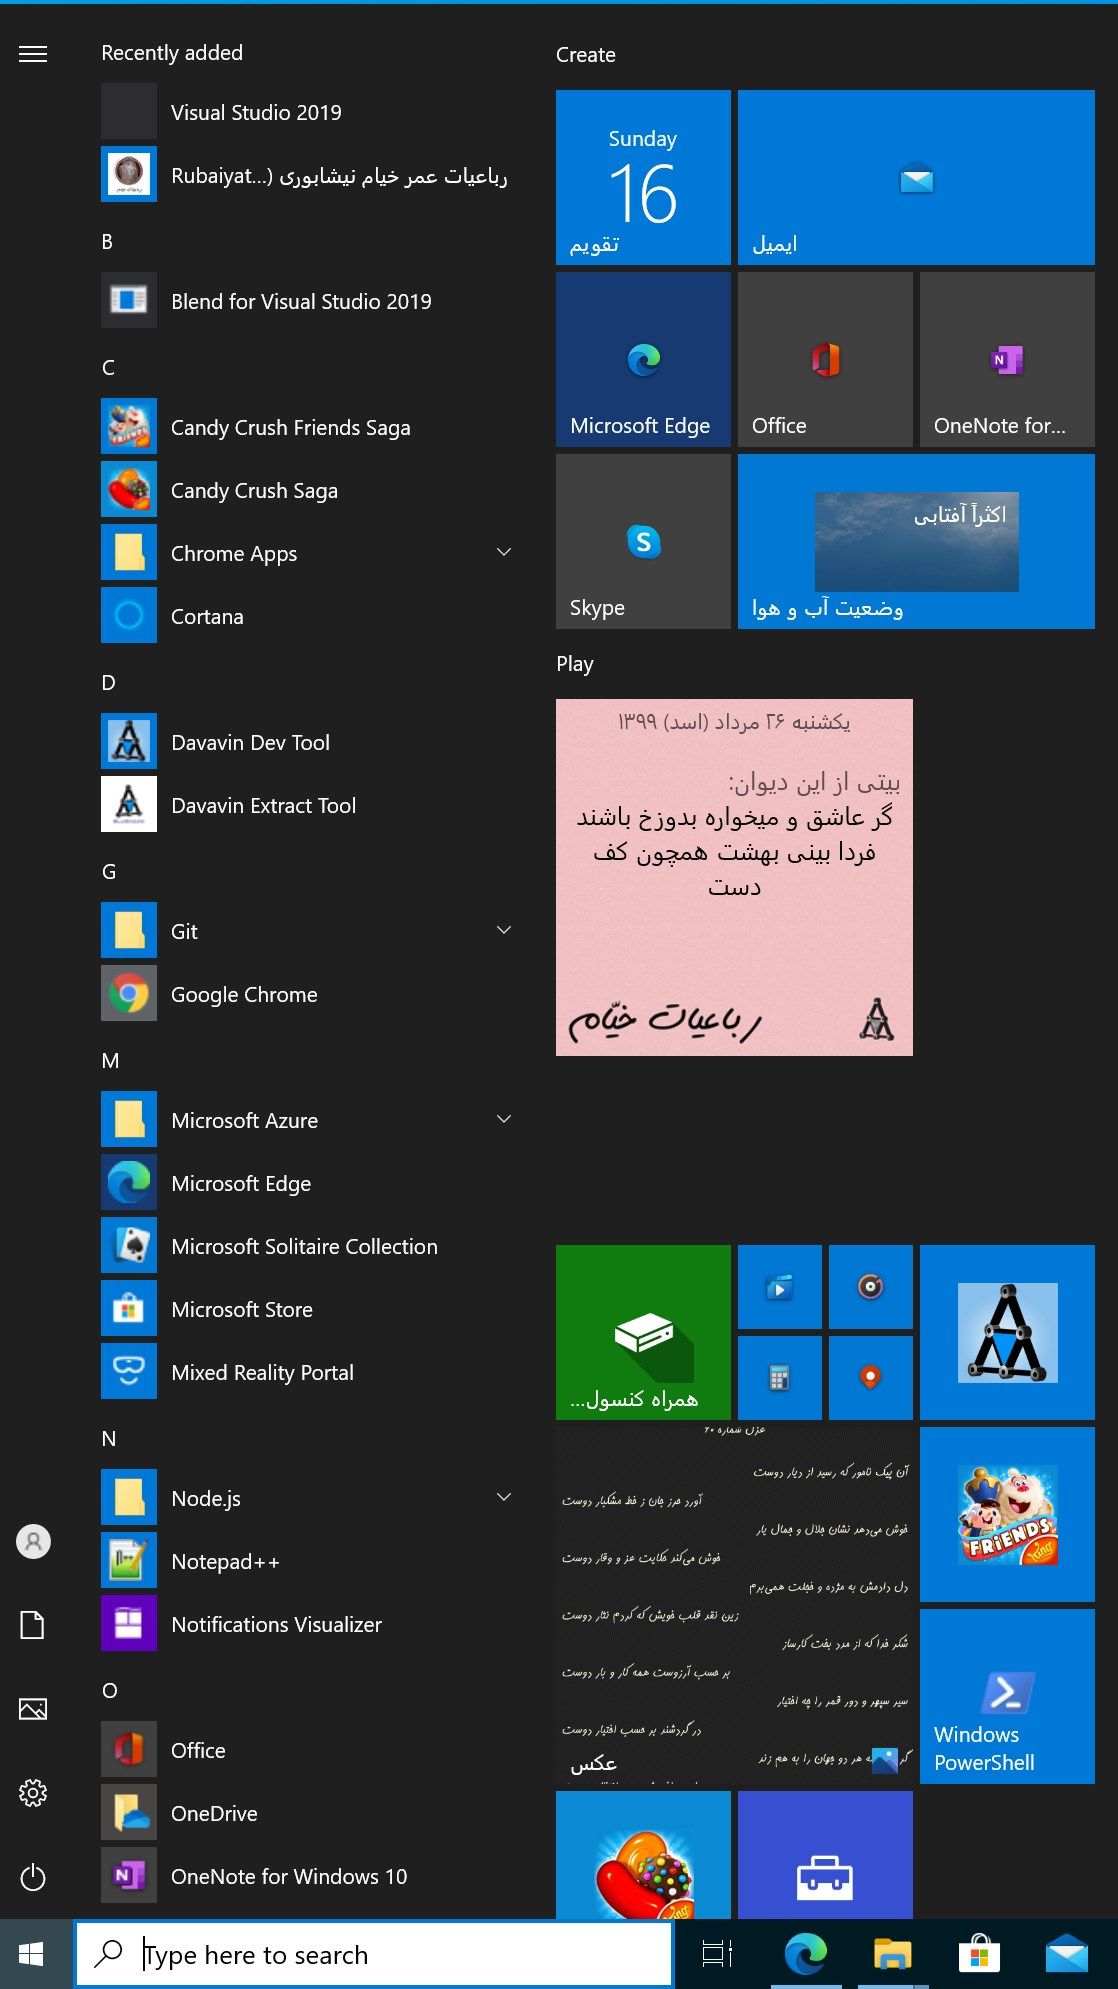 Live Tile: Gives you Persian calendar in your Windows Start Menu